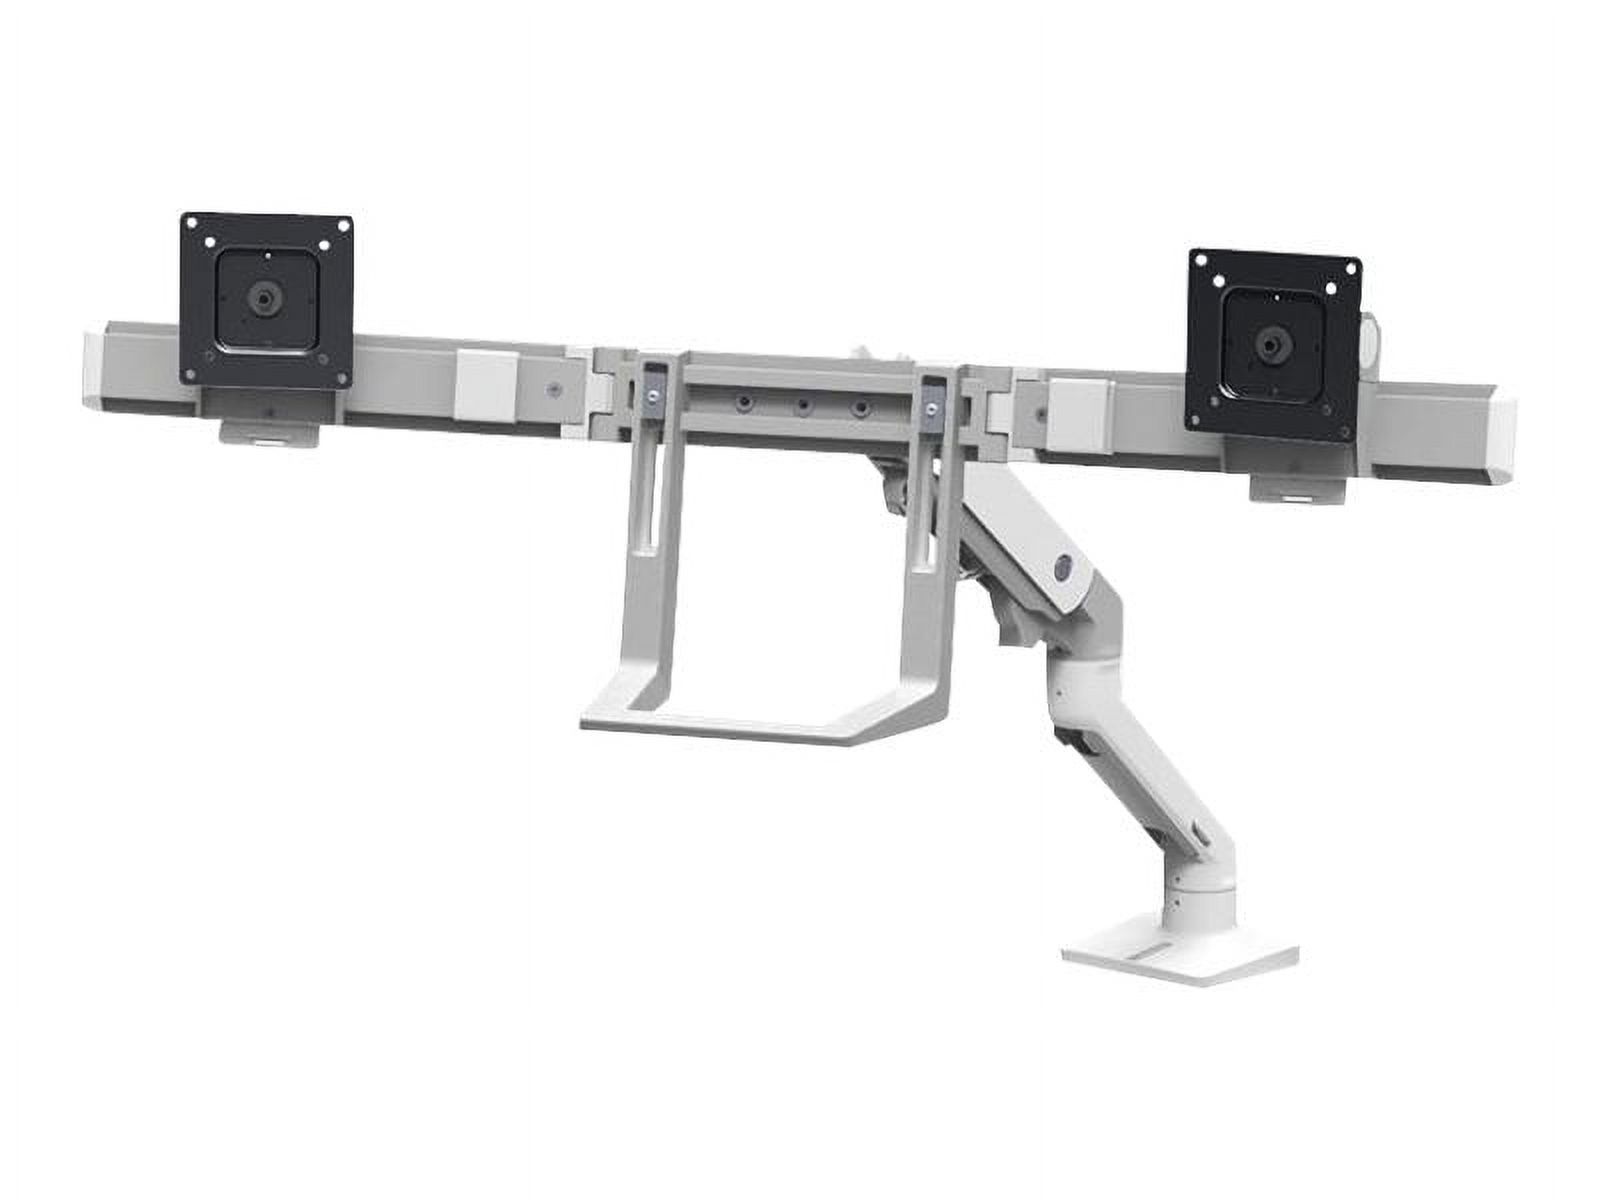 Ergotron 45-476-216 HX Desk Dual Monitor Arm Mounting Kit, Bright White - image 3 of 10